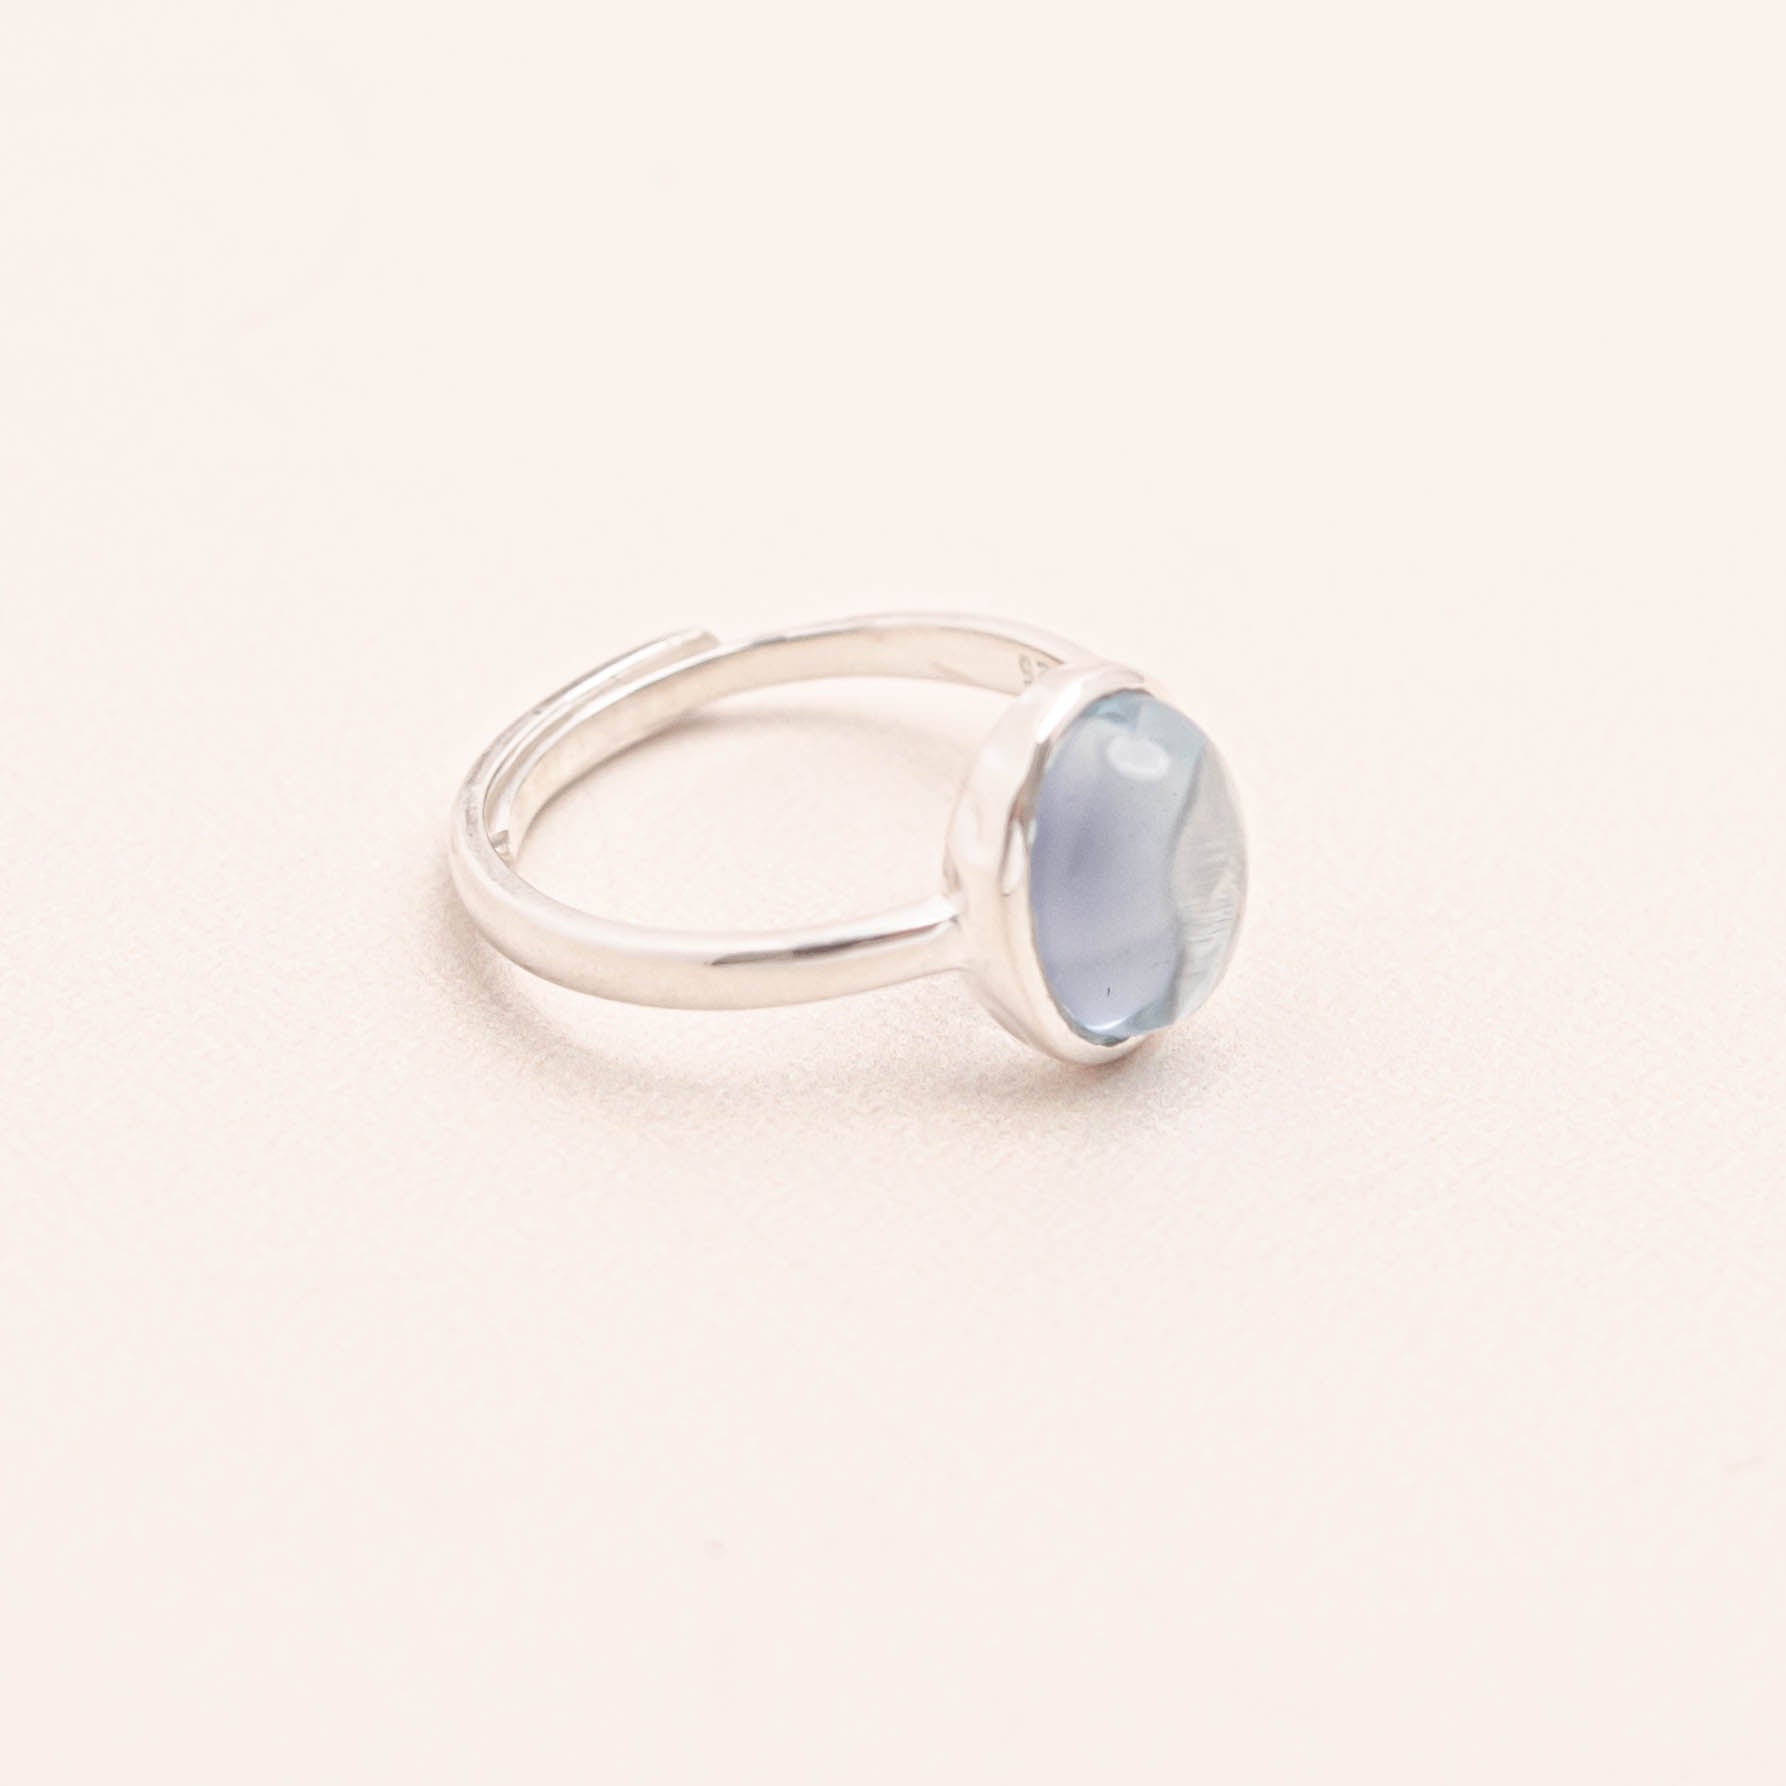 Oval Moon Stone Adjustable Ring